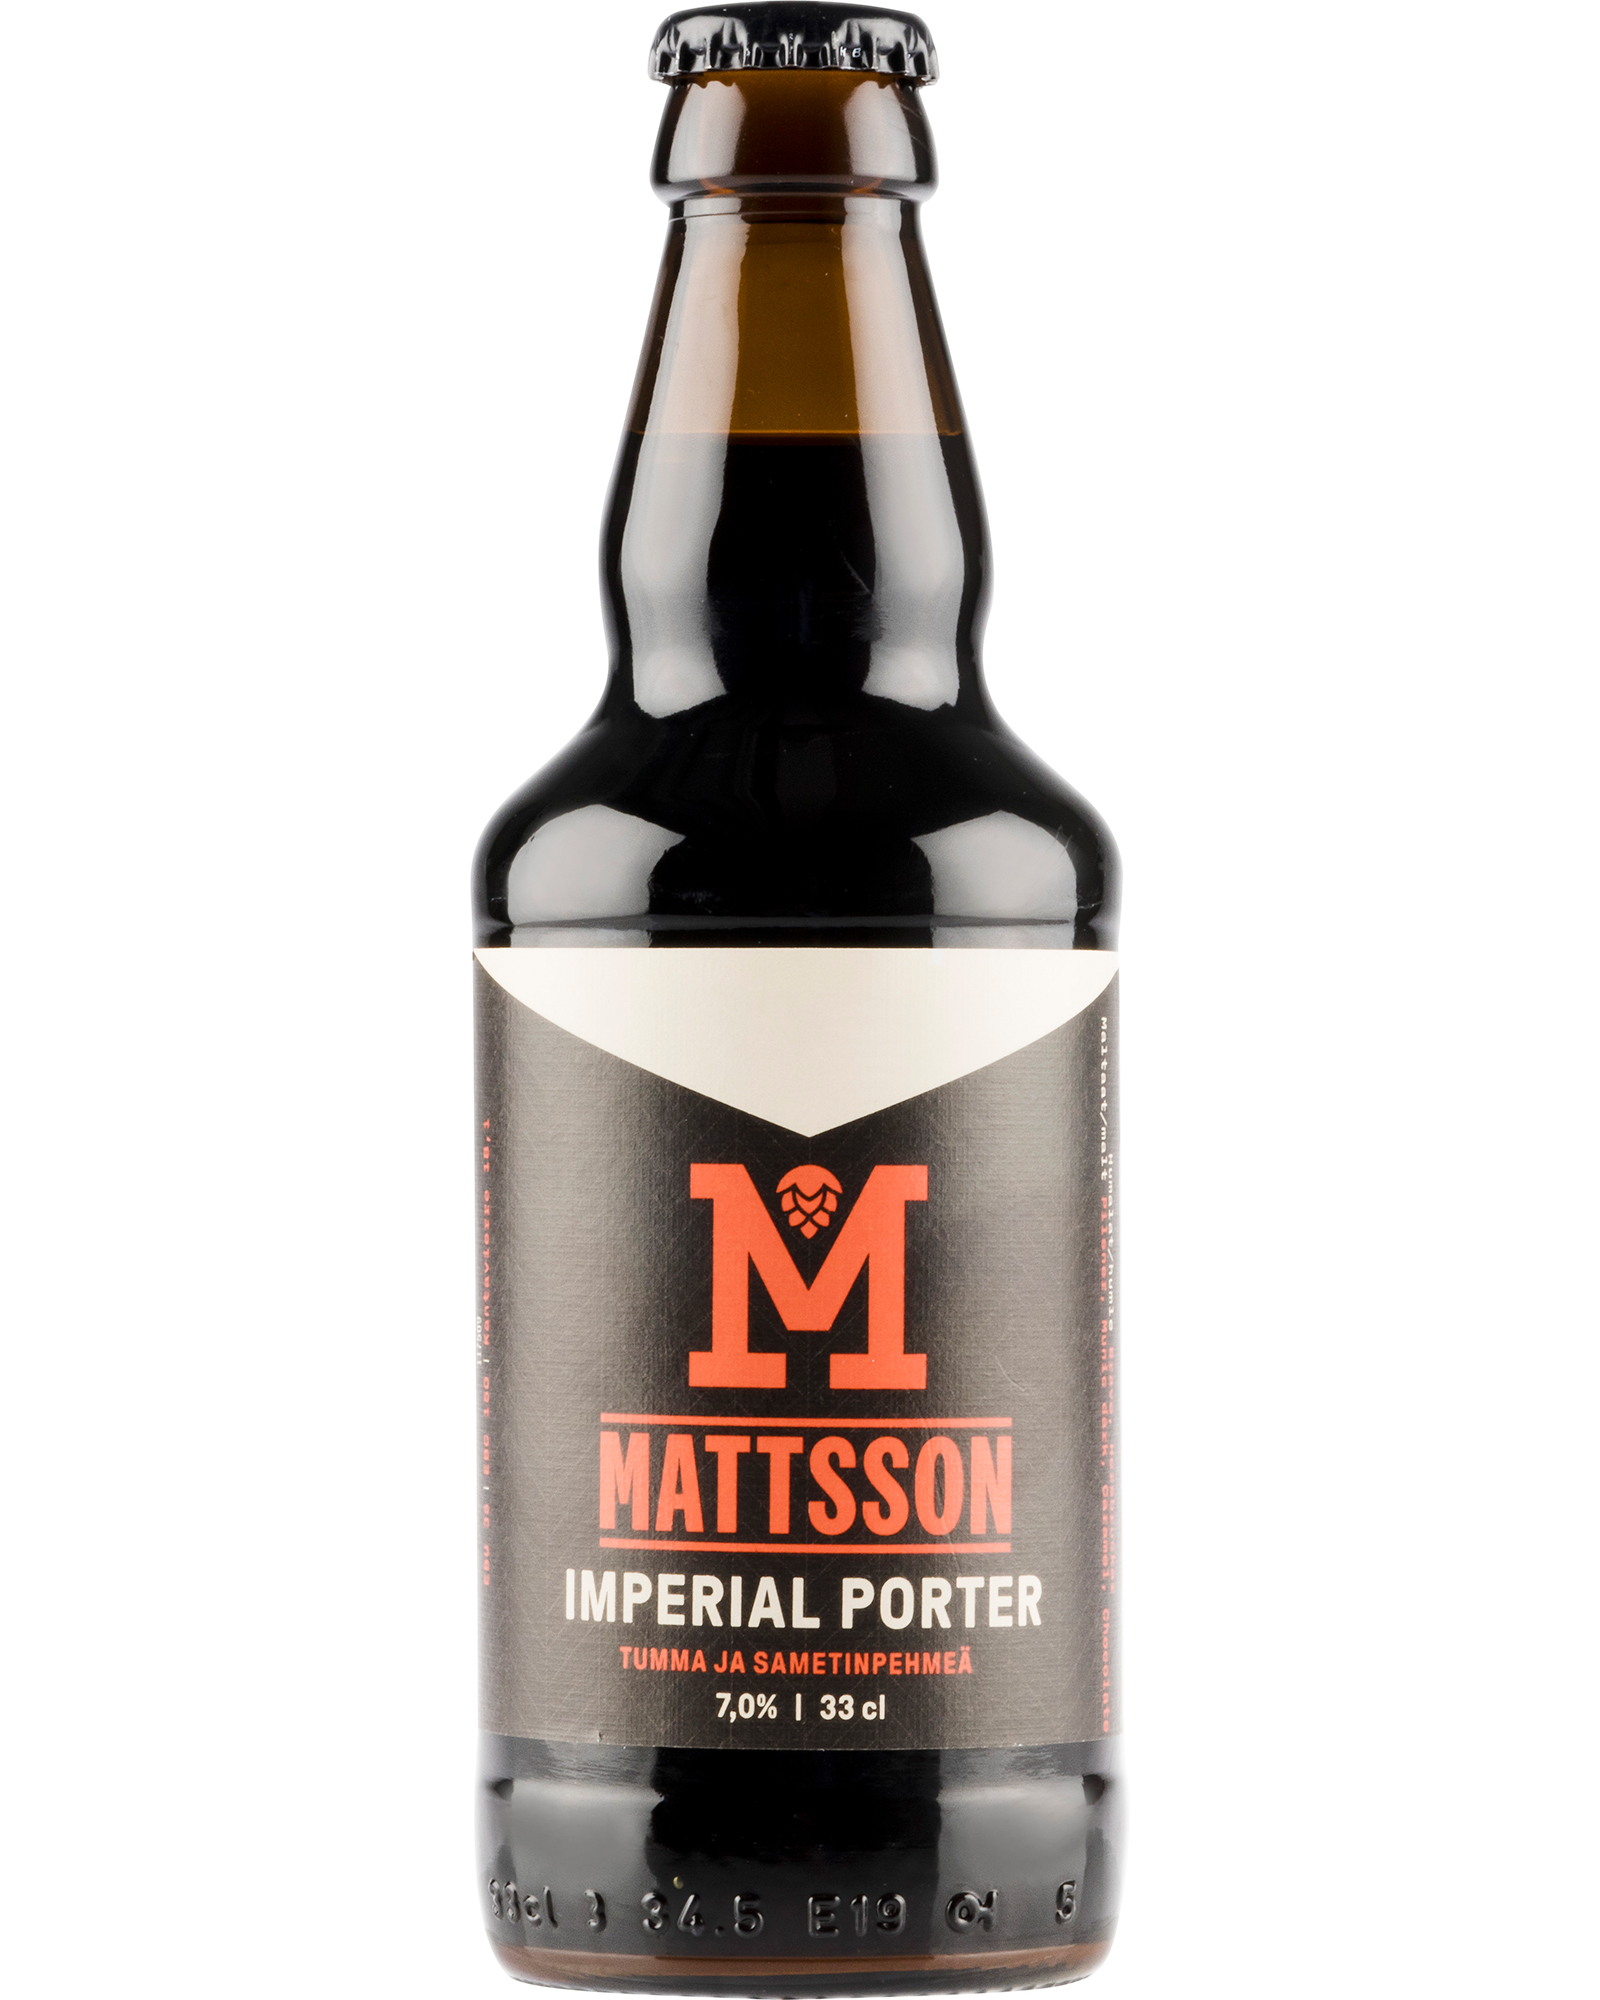 Mattsson Imperial Porter